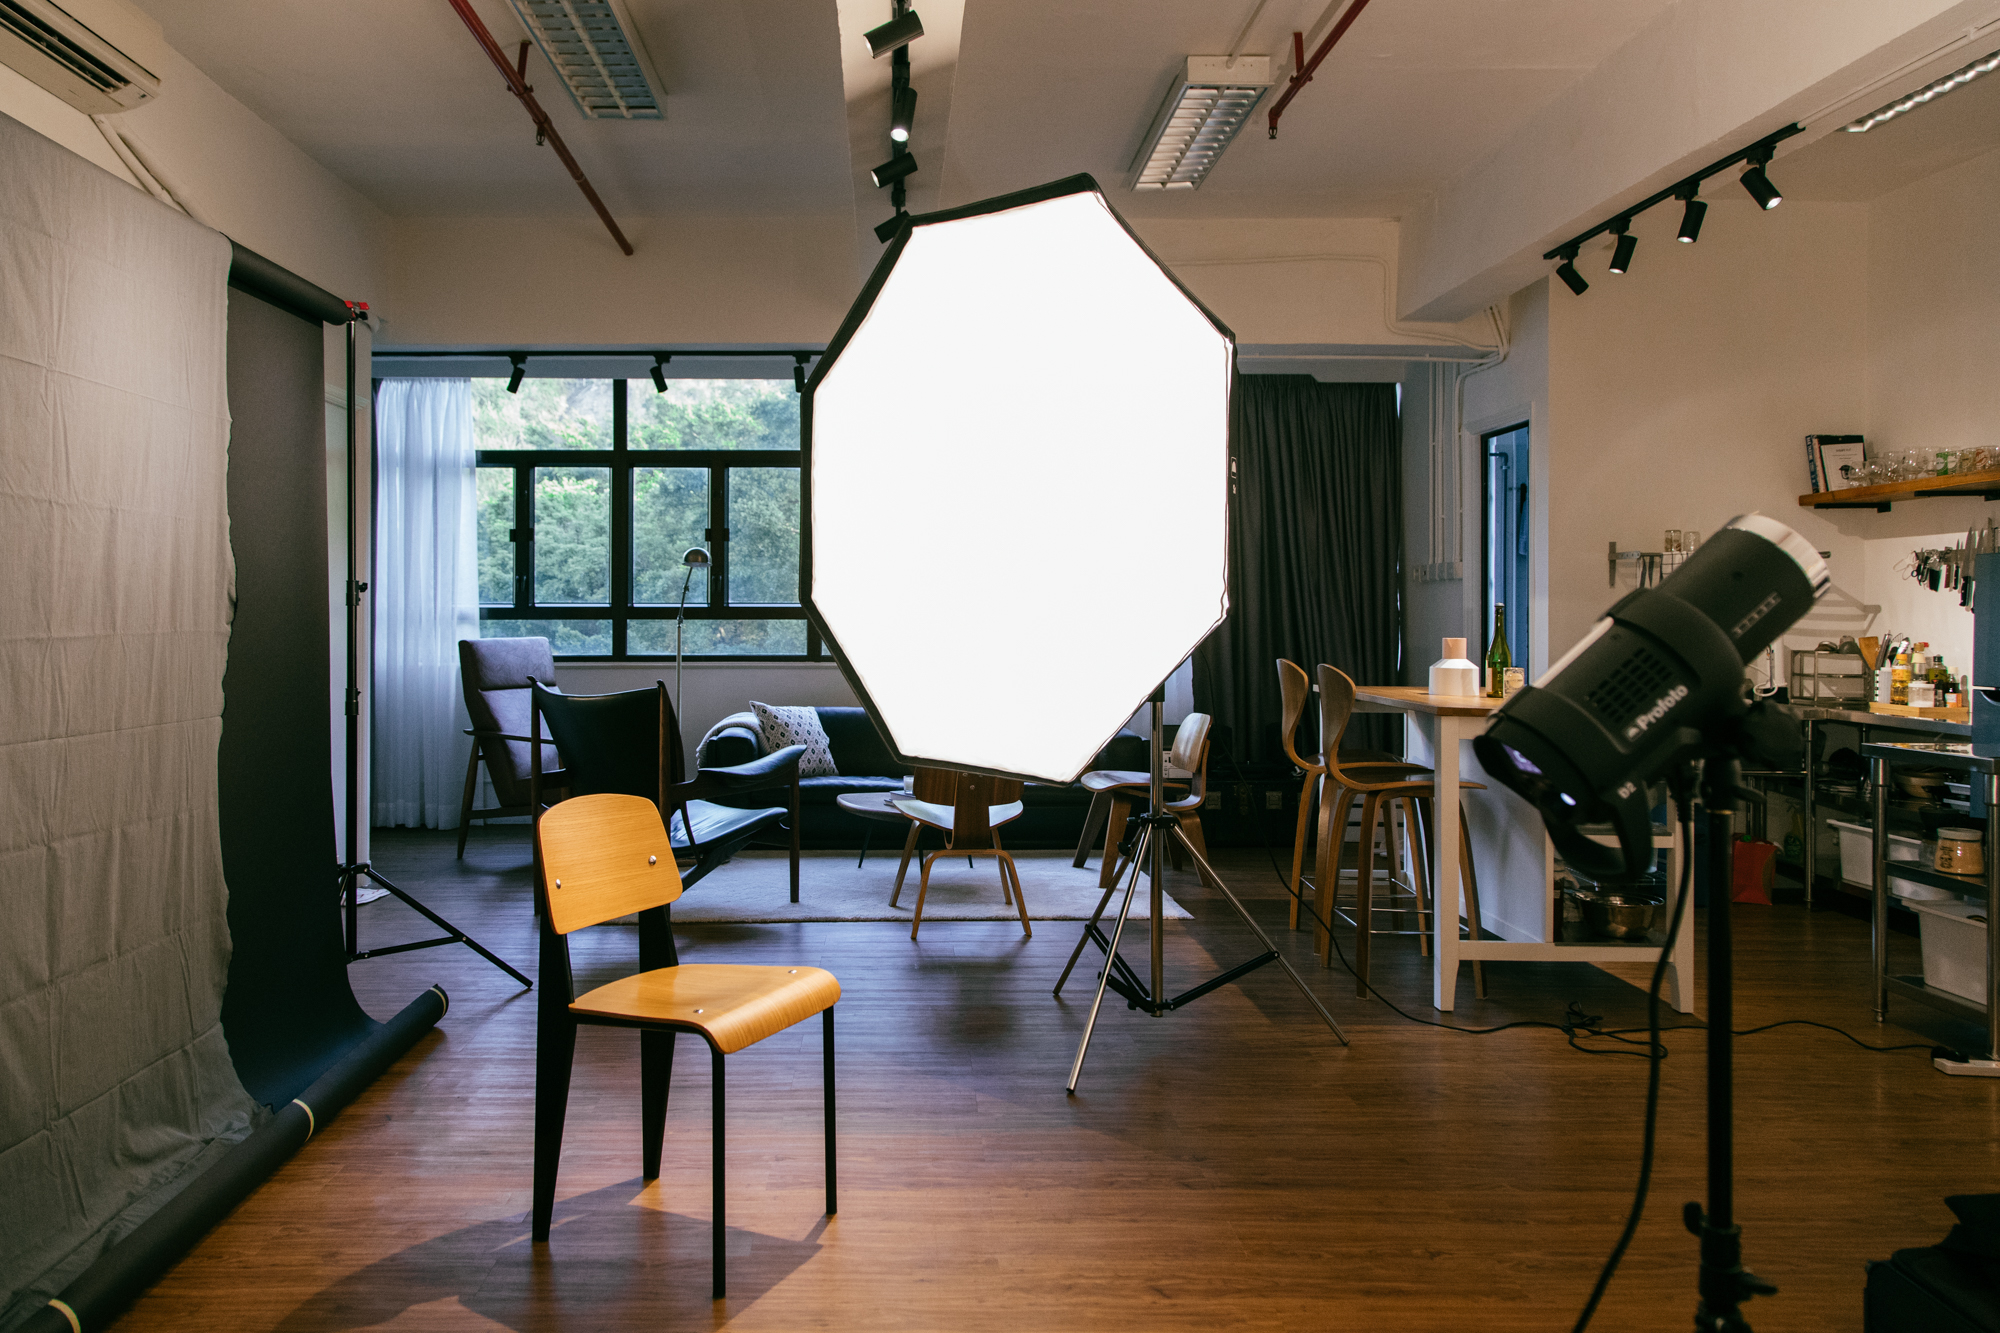 Portrait studio setup • workshop ten • Hong Kong